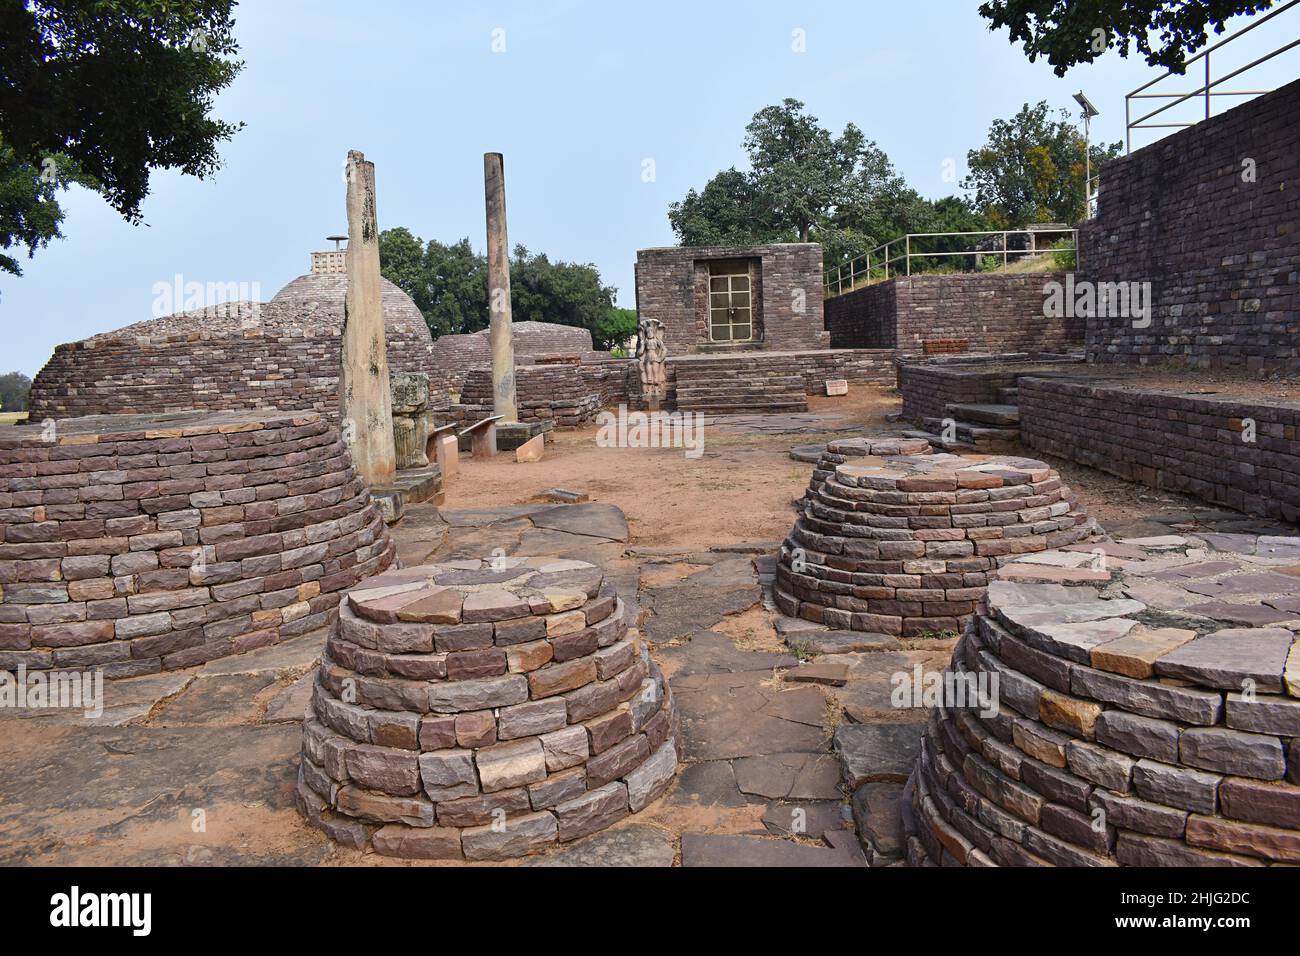 Way to Temple No 31 and pillars, Votive stupas, ancient Buddhist monument at Sanchi, Madhya Pradesh, India Stock Photo